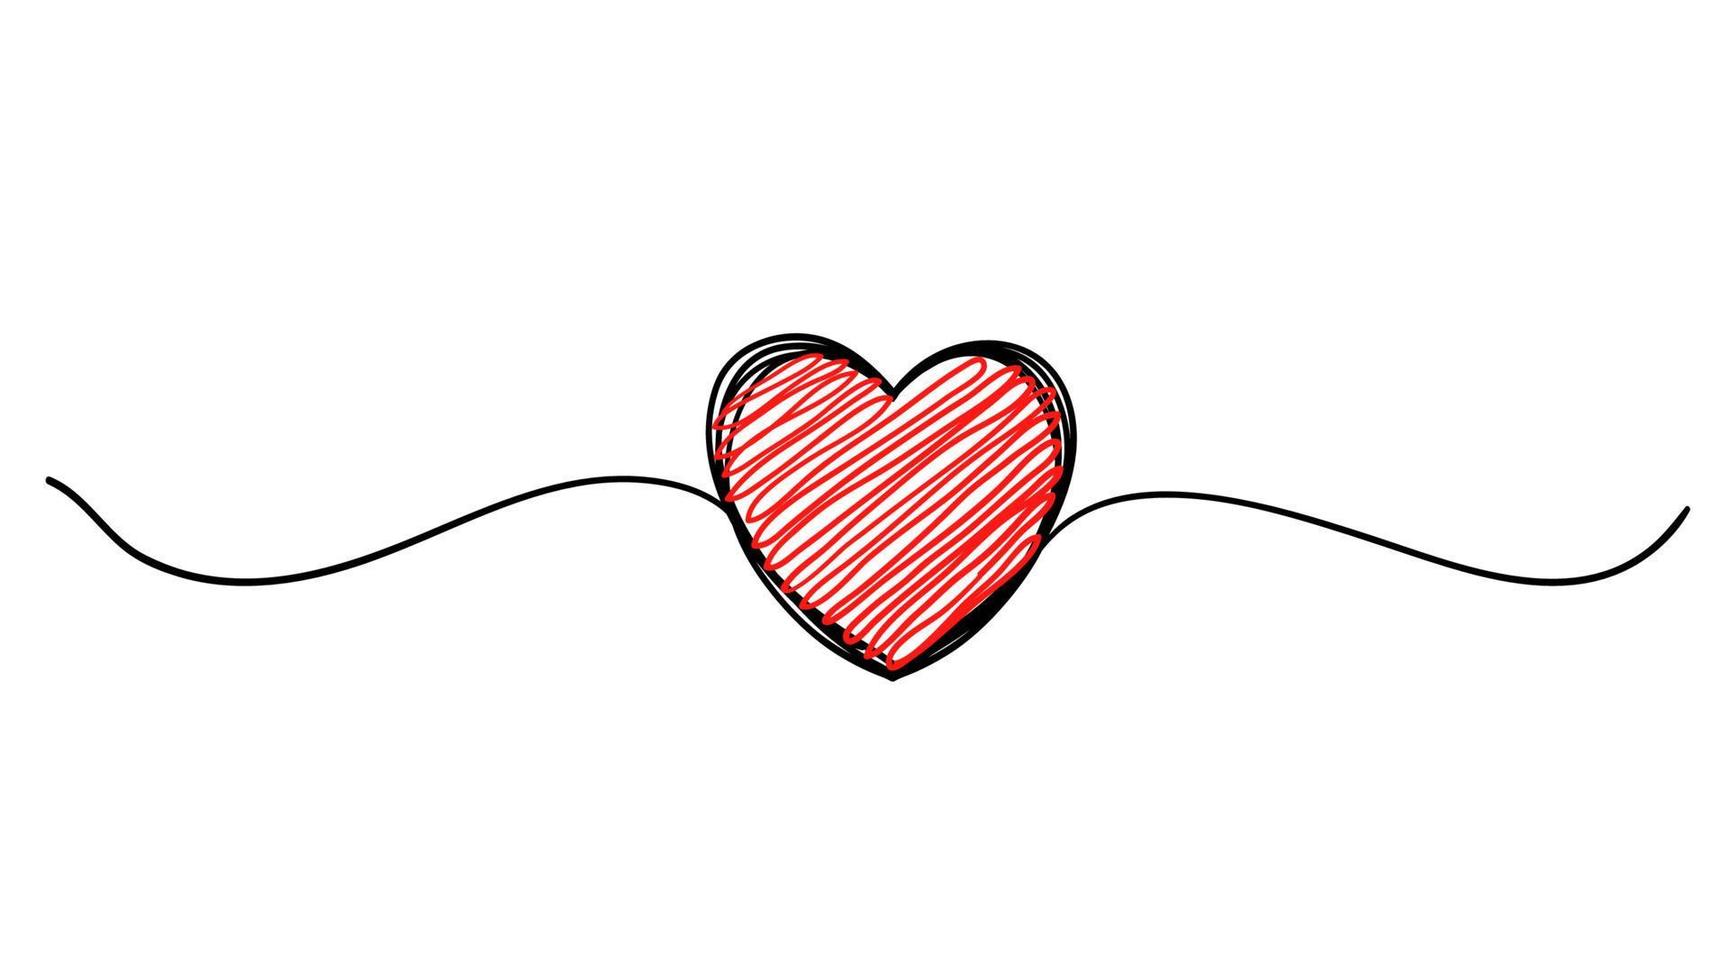 corazón dibujado a mano con garabatos redondos enredados con línea delgada, forma divisoria. vector de estilo de línea continua aislado